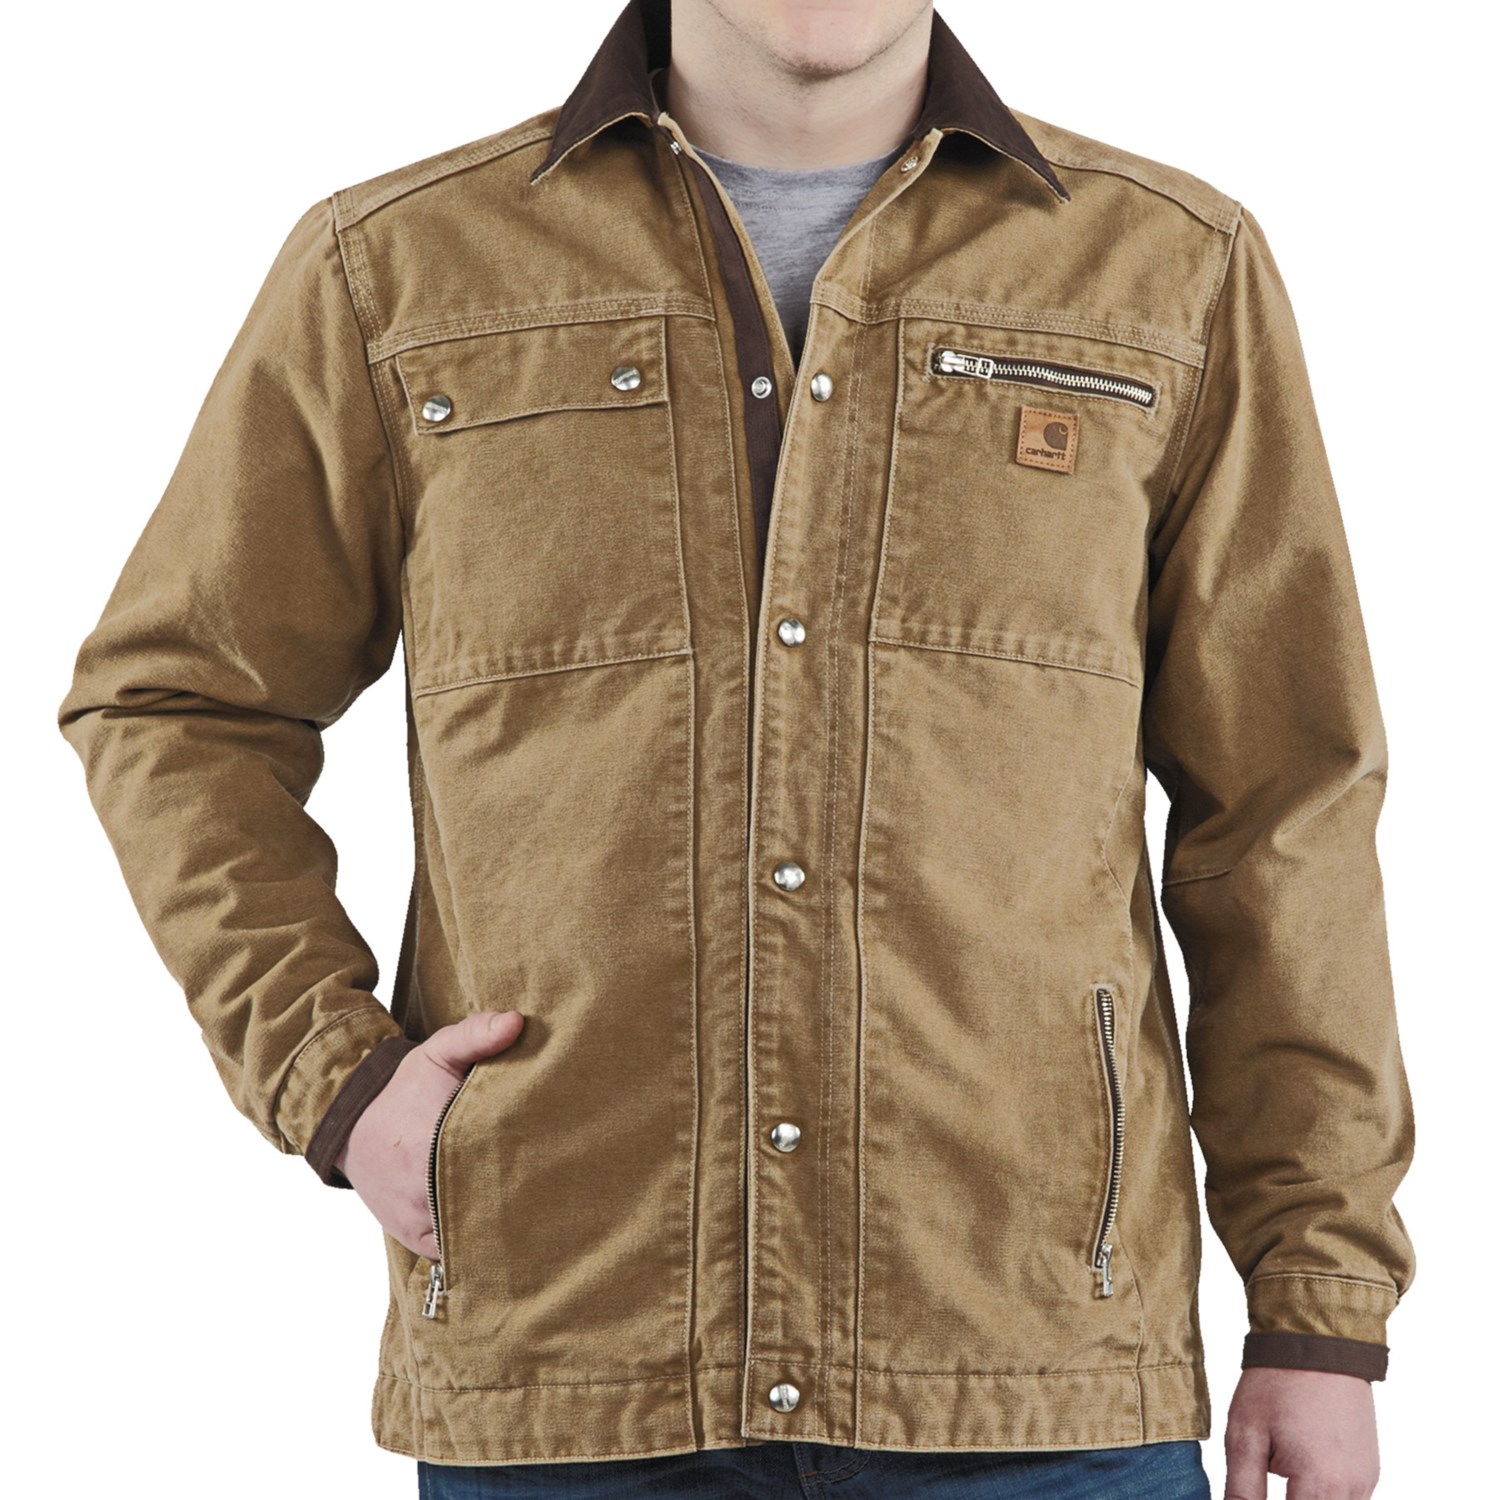 Carhartt barn coat - Lookup BeforeBuying